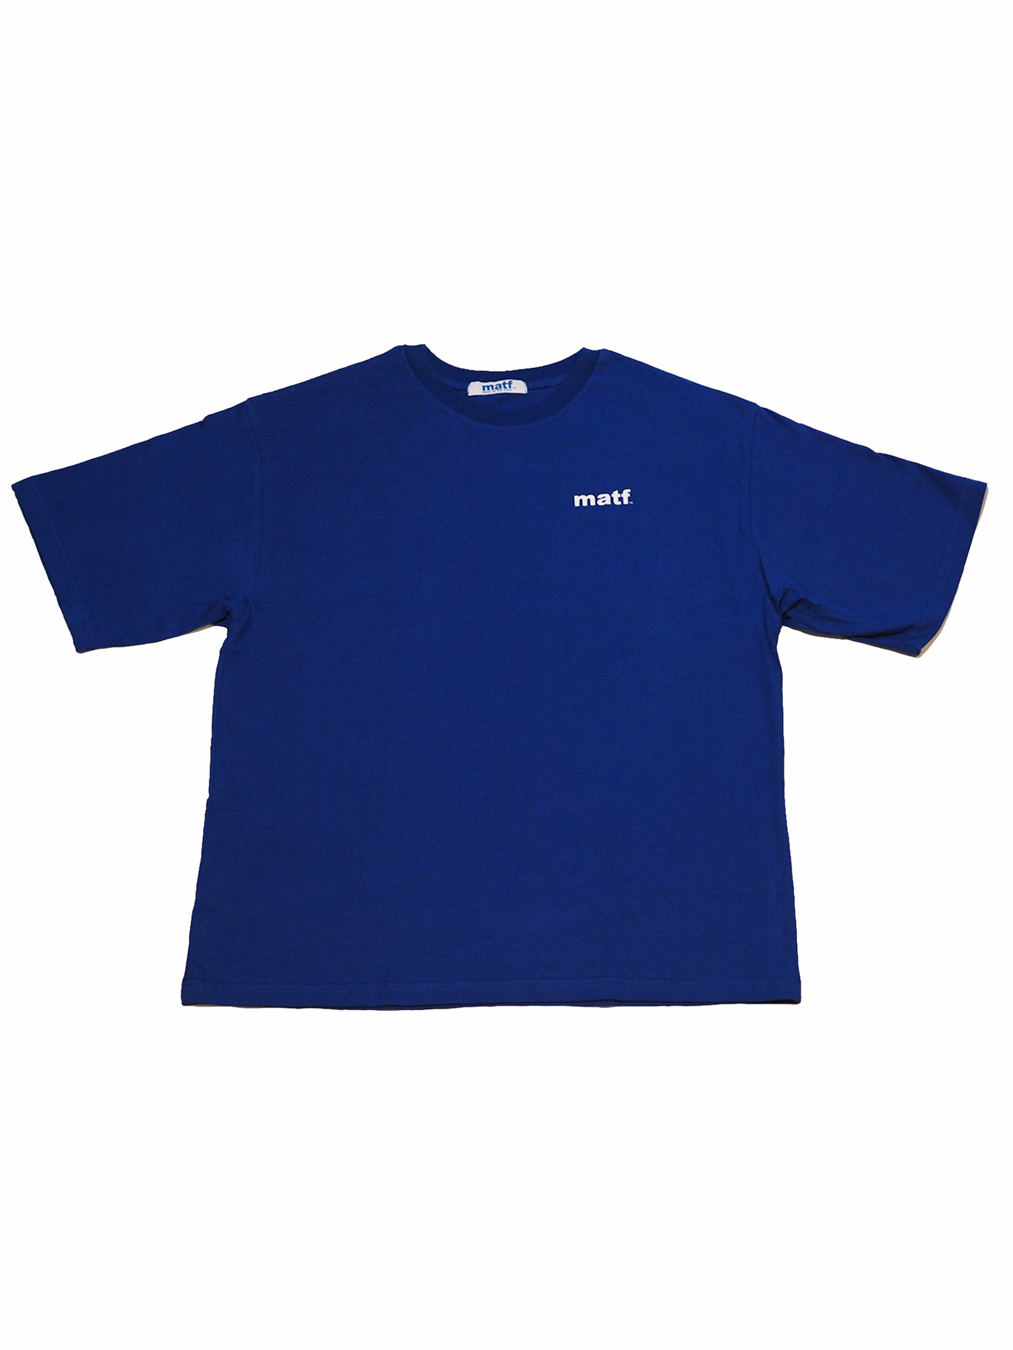 Matf Trademark *Ellipses* T-Shirt (Dark blue)